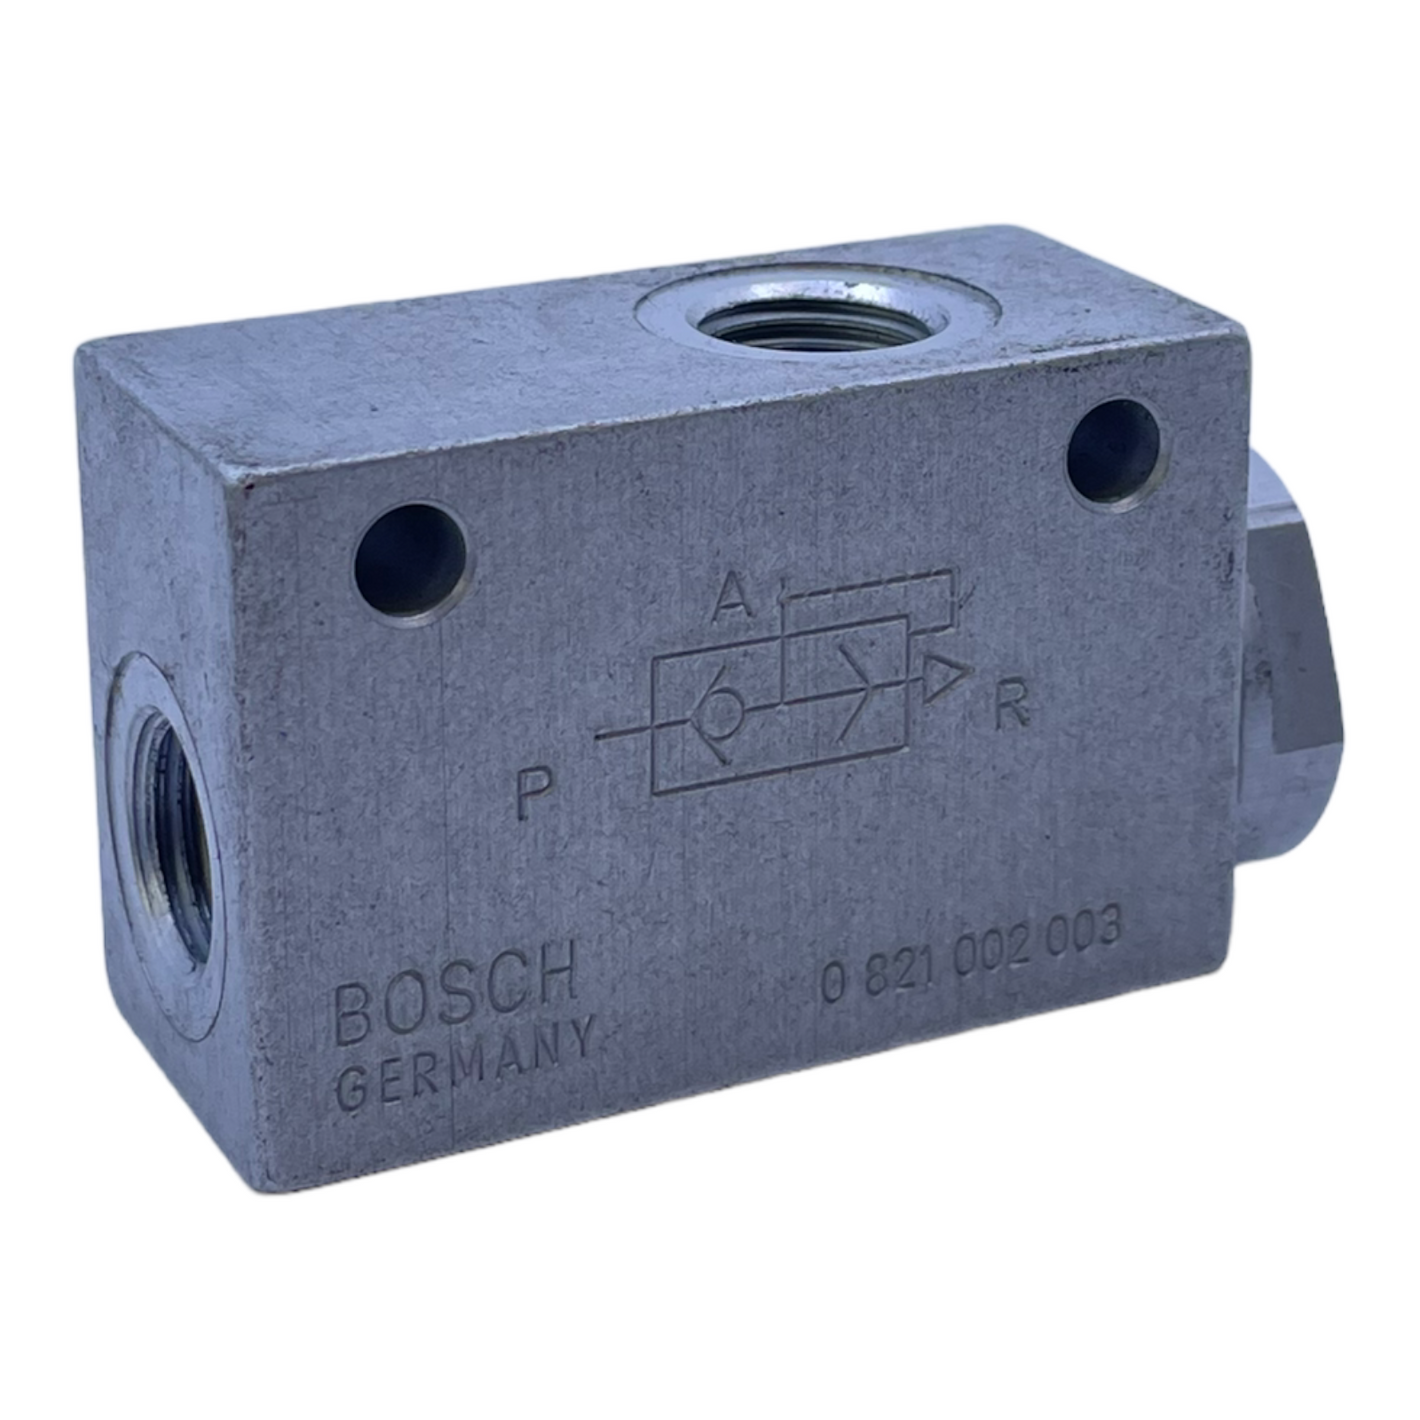 Bosch 0 821 002 003 valve Bosch 0 821 002 003 valve